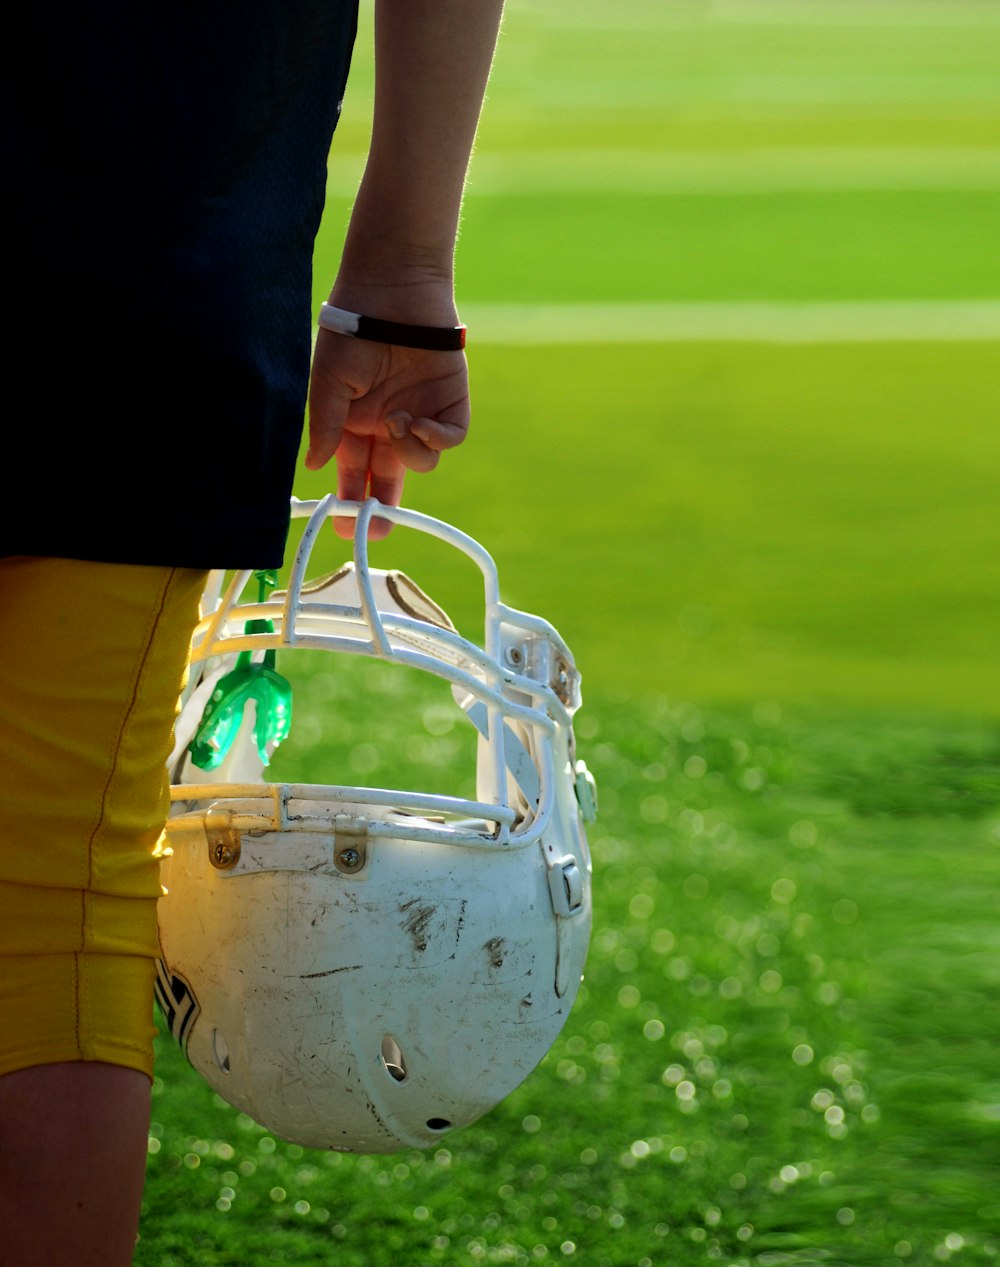 Fotografia de foco raso de jogador de futebol segurando capacete